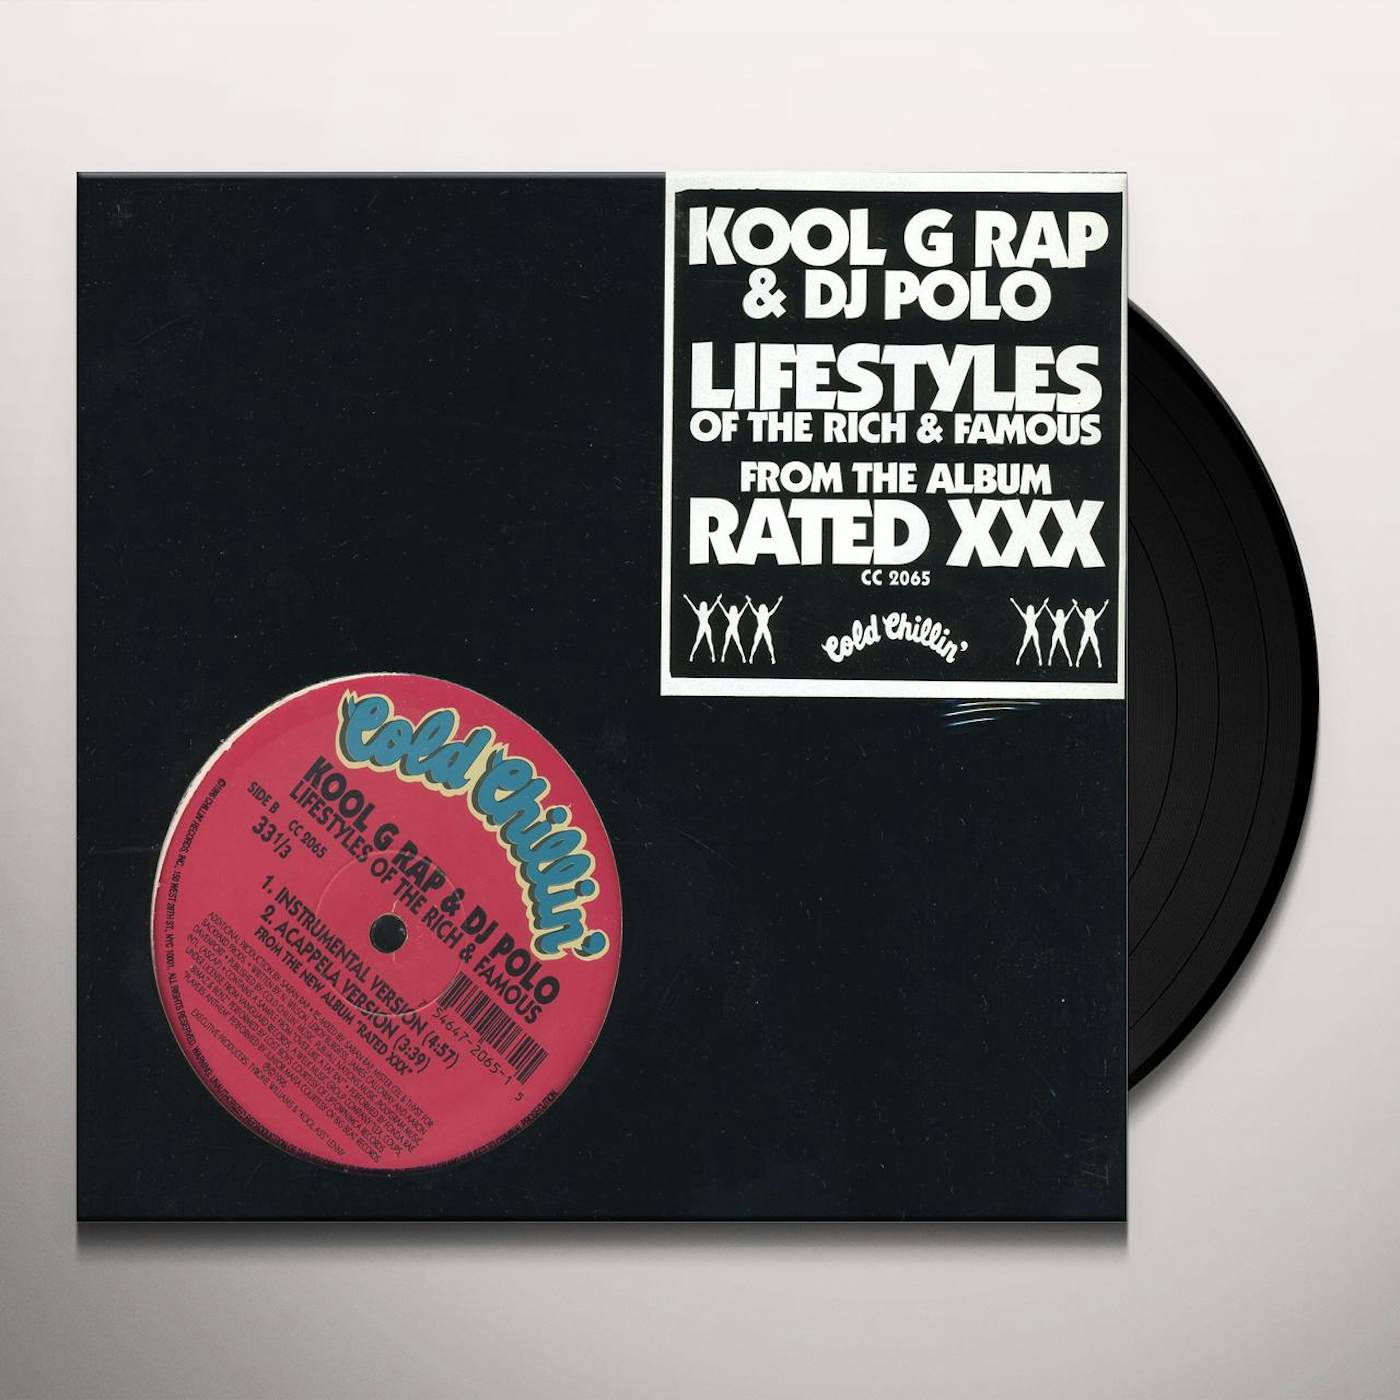 Kool G Rap & DJ Polo LIFESTYLES OF THE RICH & FAMOUS Vinyl Record